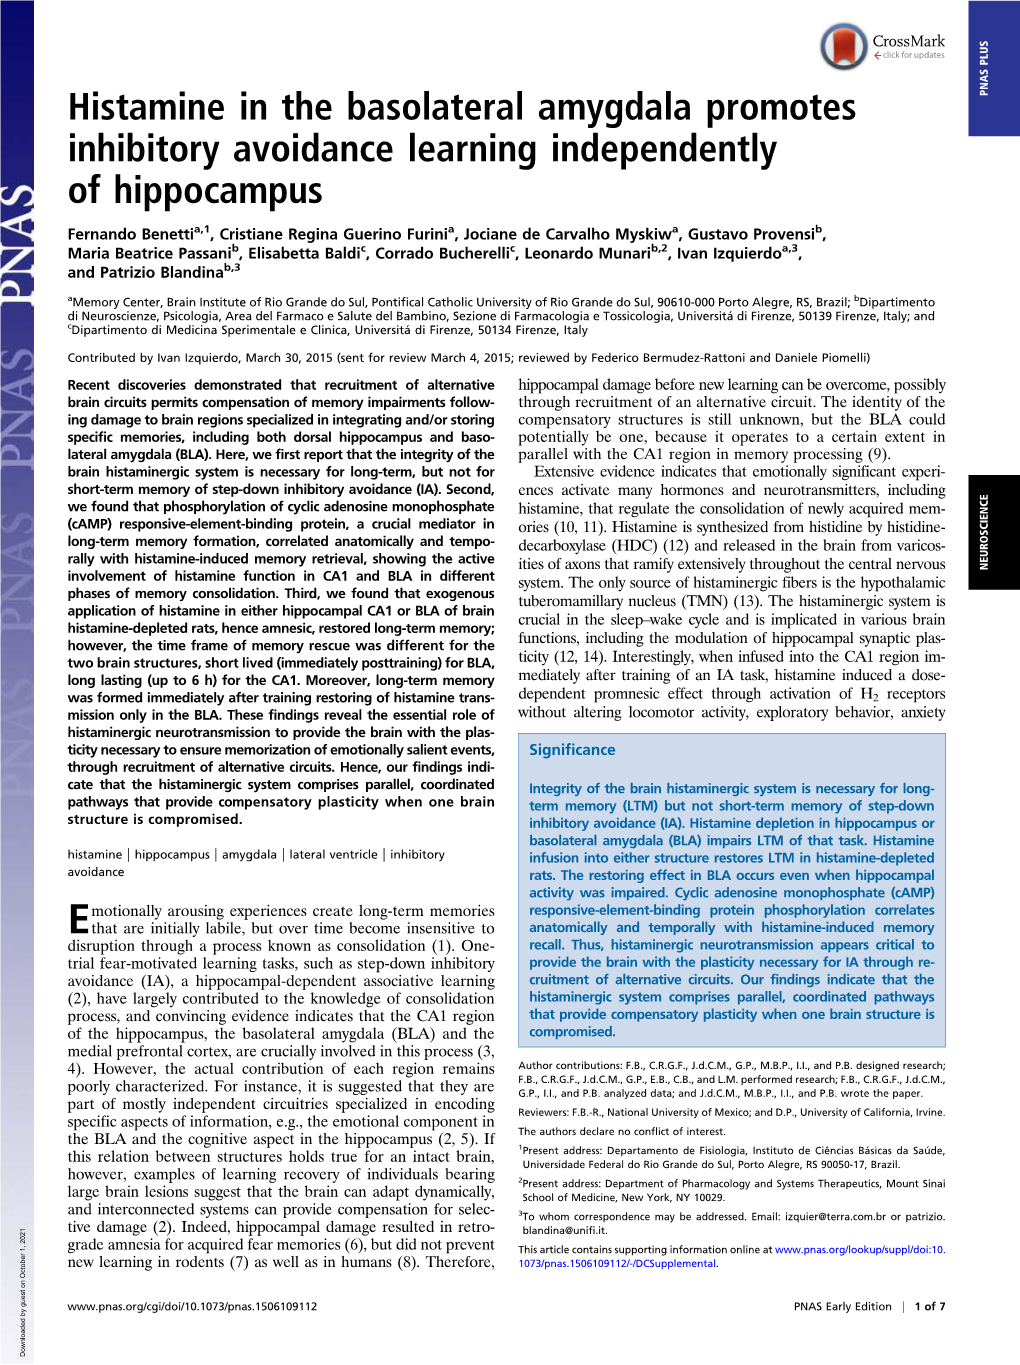 Histamine in the Basolateral Amygdala Promotes Inhibitory Avoidance